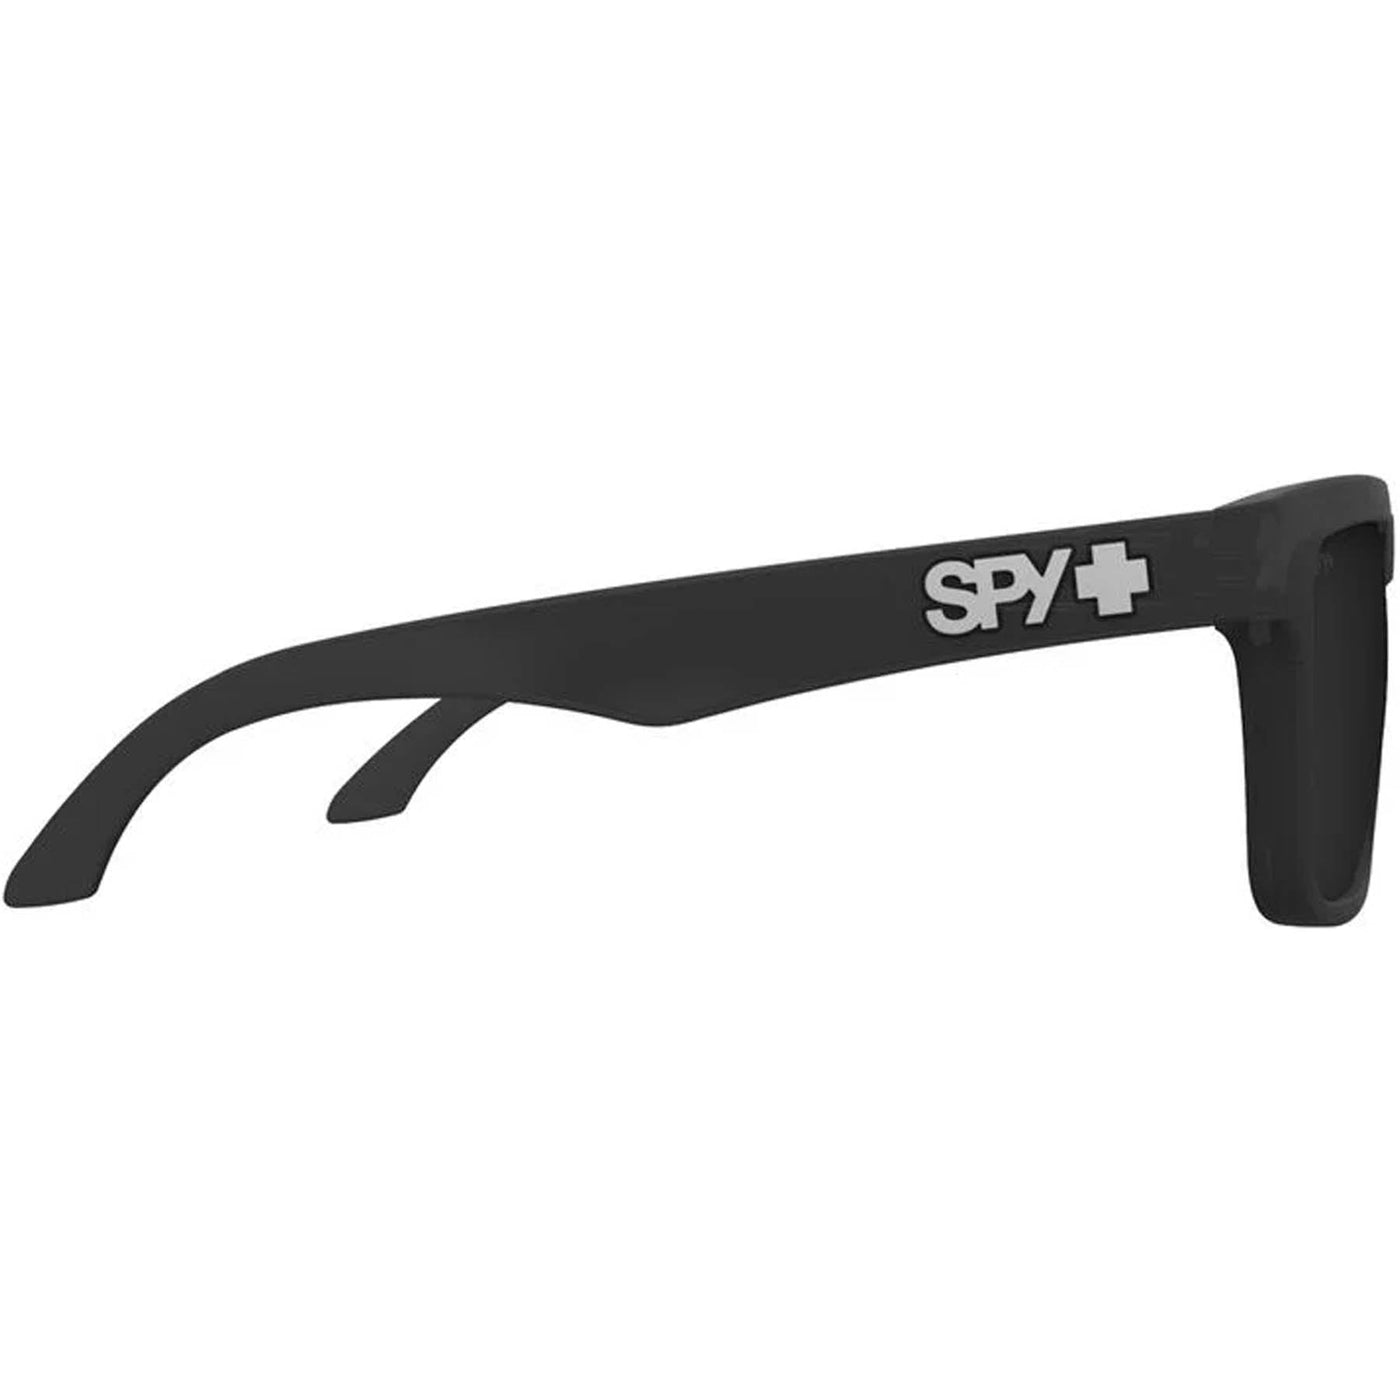 SPY HELM Sunglasses, Happy Lens - Translucent Black 8Lines Shop - Fast Shipping